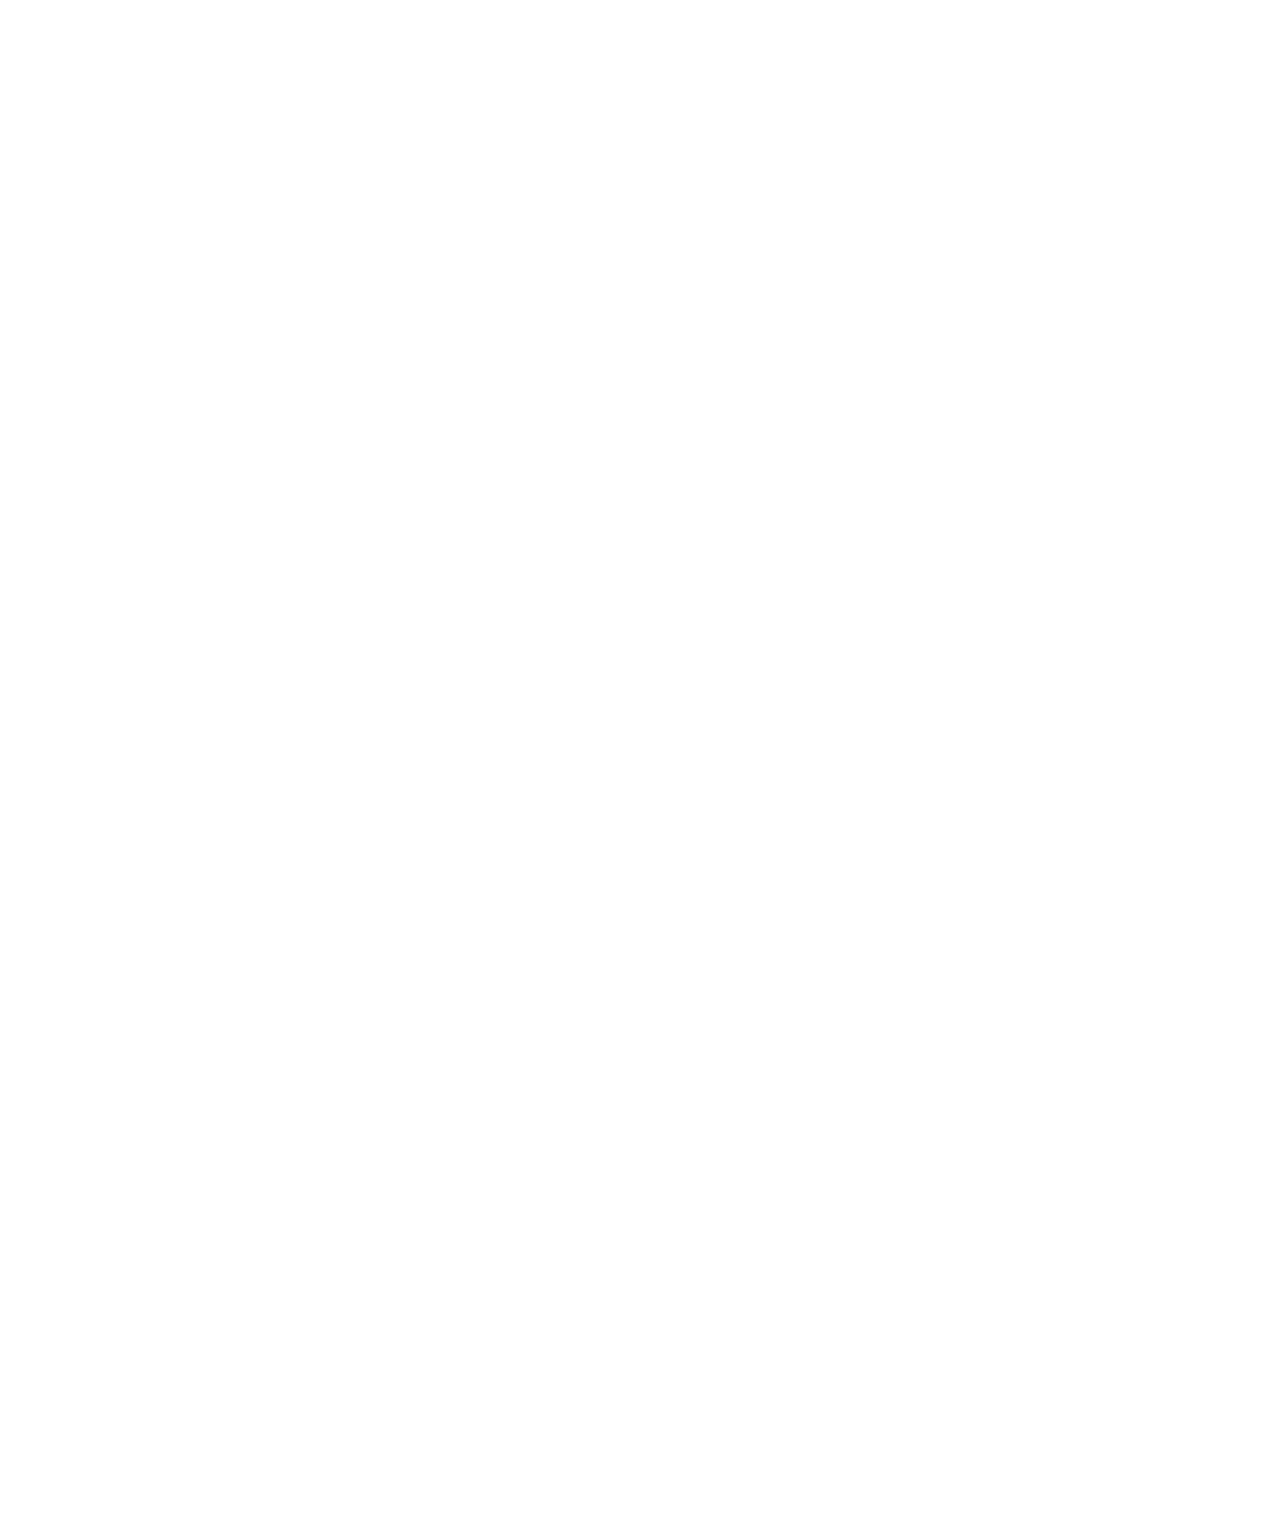 UPM-Kymmene logo for dark backgrounds (transparent PNG)